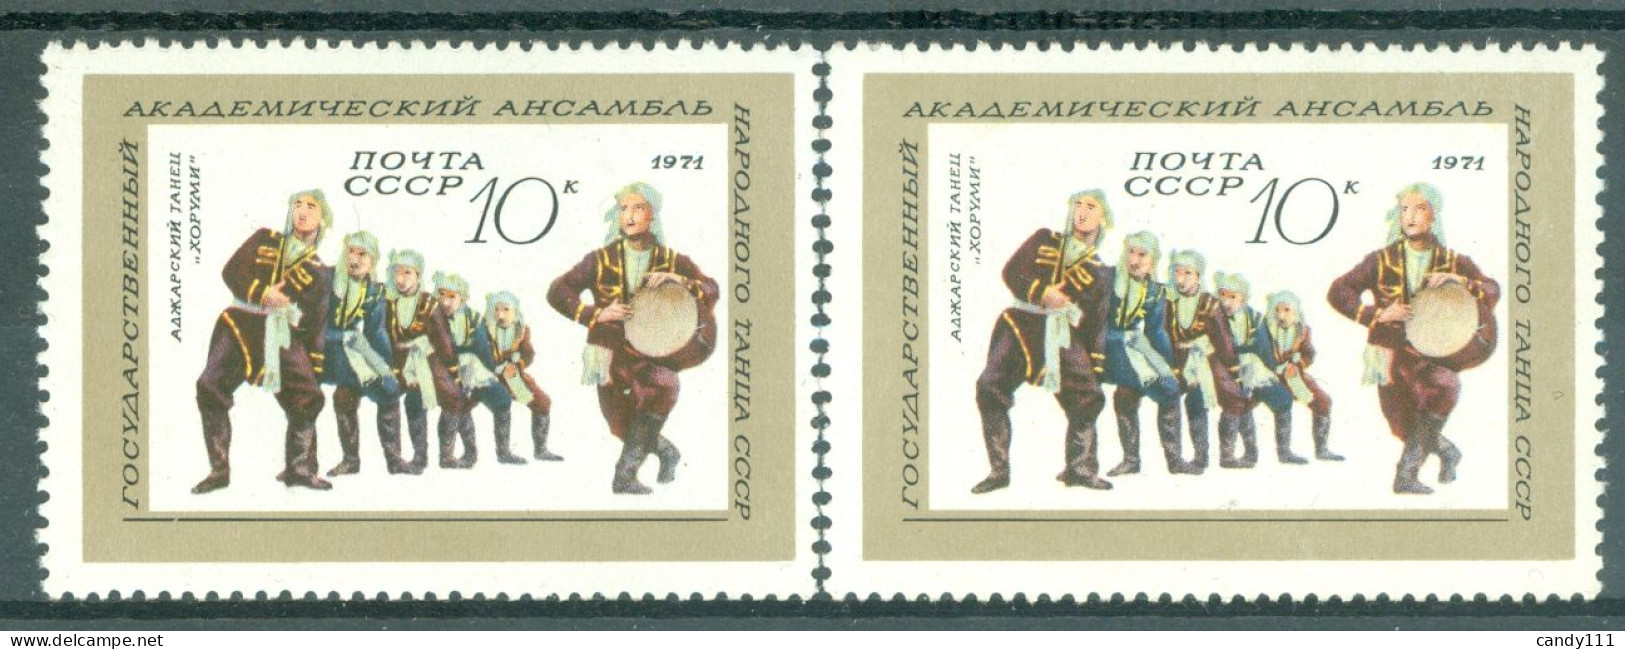 1971 Georgian Dance "Khorumi",Folk Dance Ensemble,Russia,3852,GUM Variety,MNH - Baile